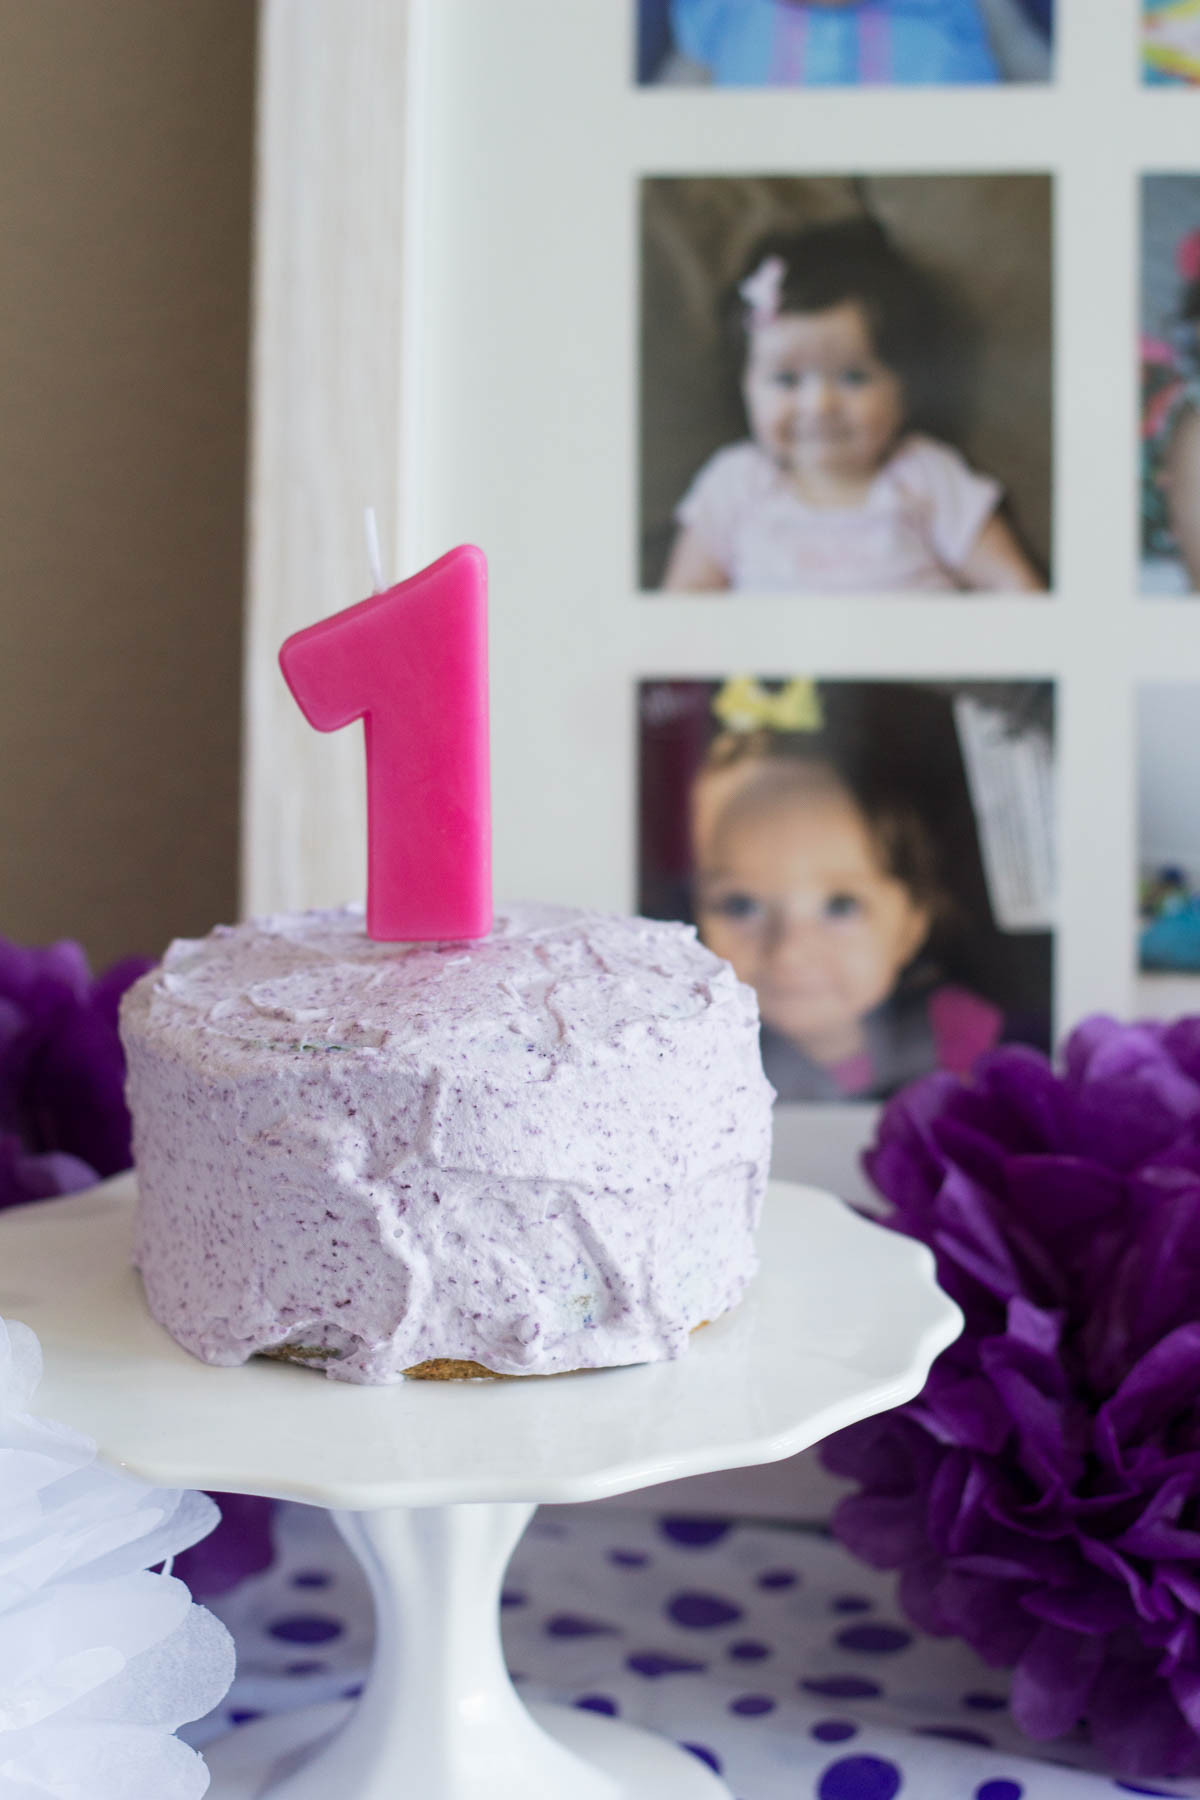 Healthy Smash Cake Recipe 1St Birthday
 Healthier Smash Cake Recipe Hannah s Purple Polka Dot 1st